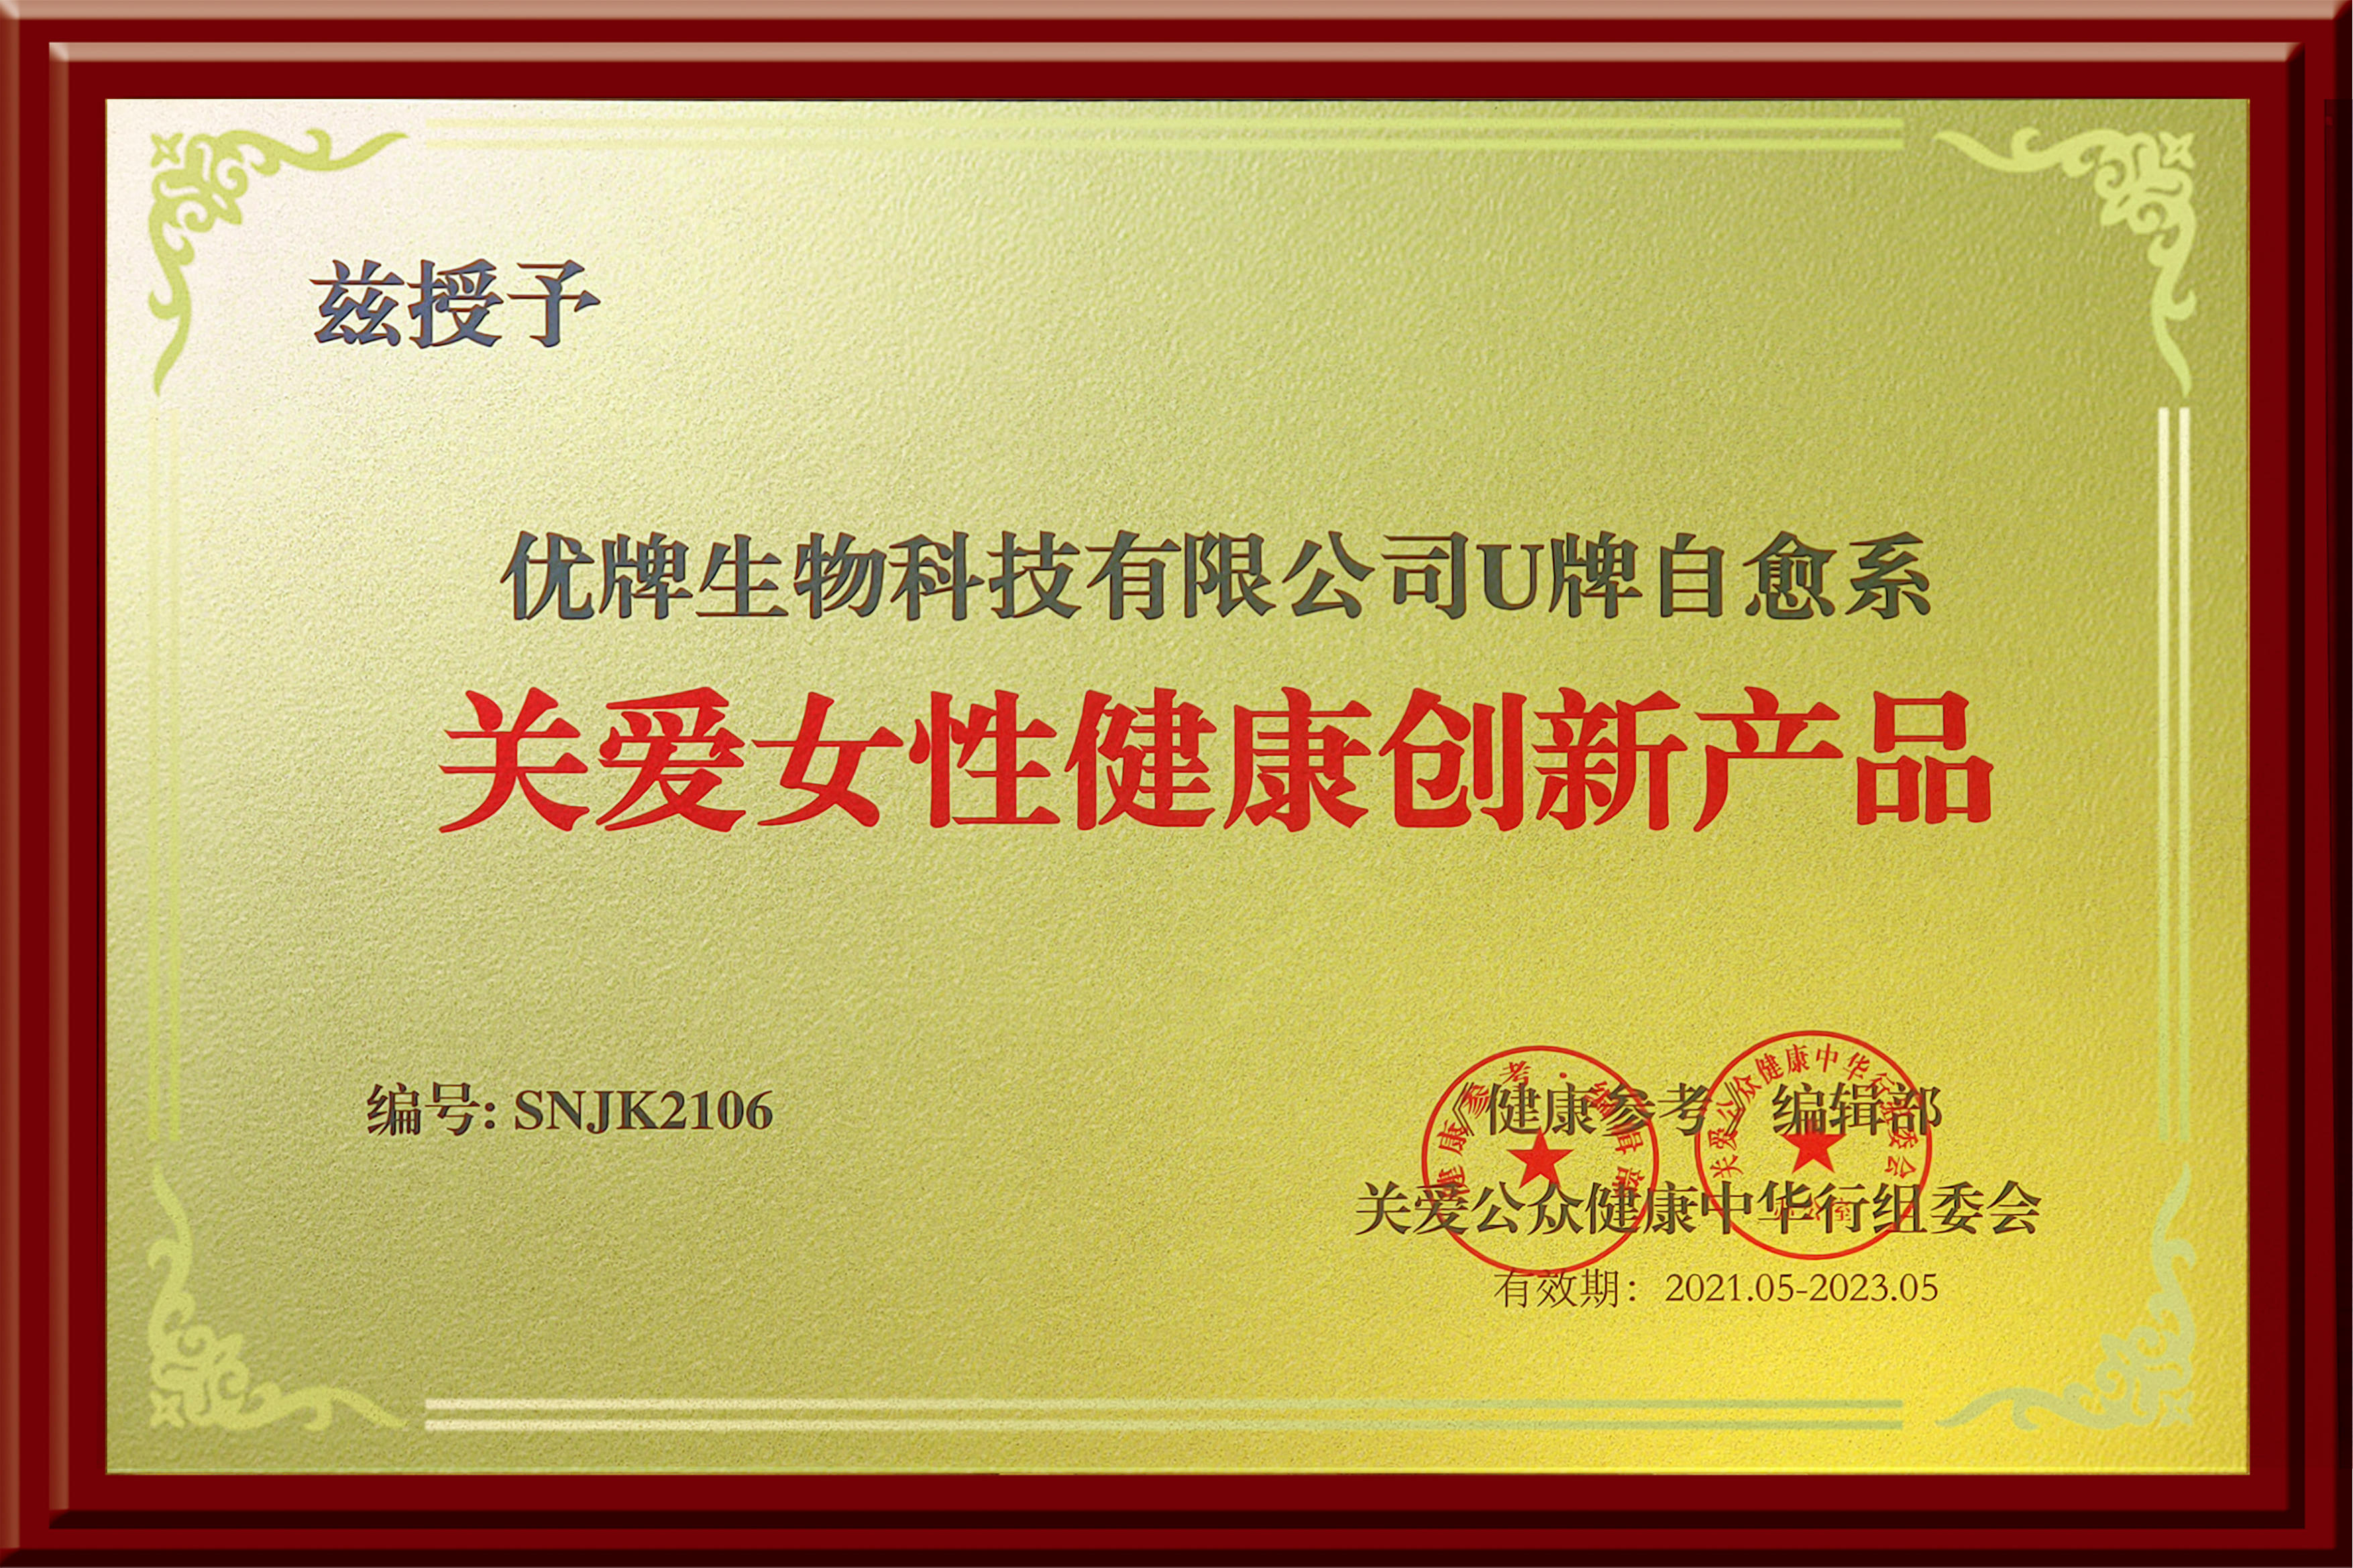 U牌荣获中国优生优育协会药械委【关爱女性健康创新产品】的荣誉称号